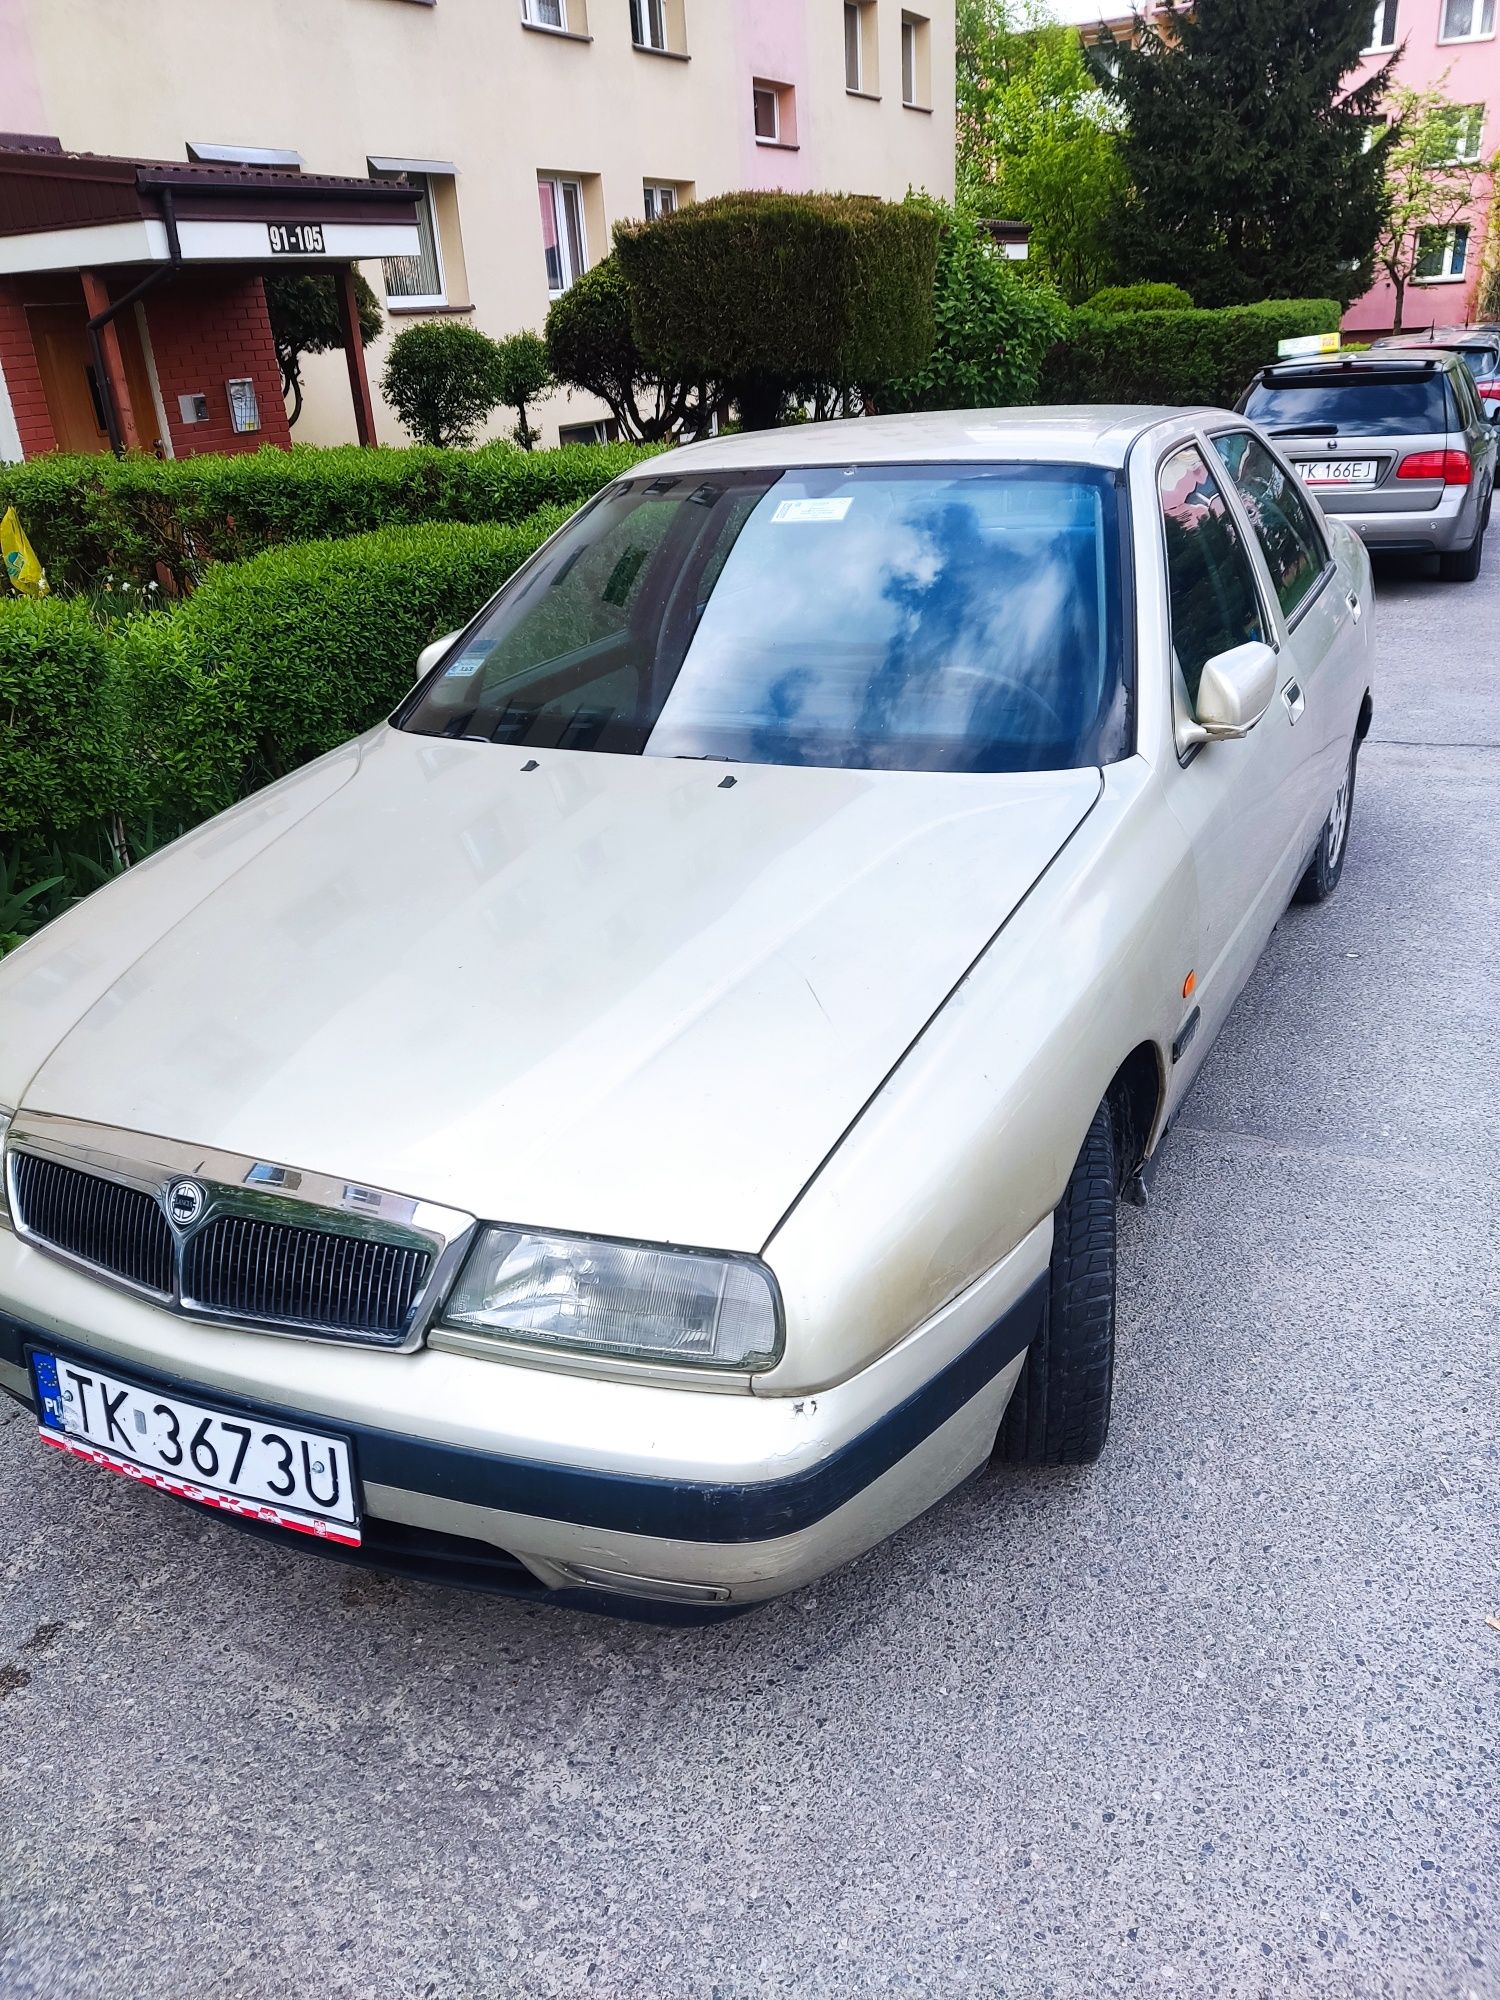 Lancia Kappa 2.0 20v 1996r 146 km. Benzyna/gaz